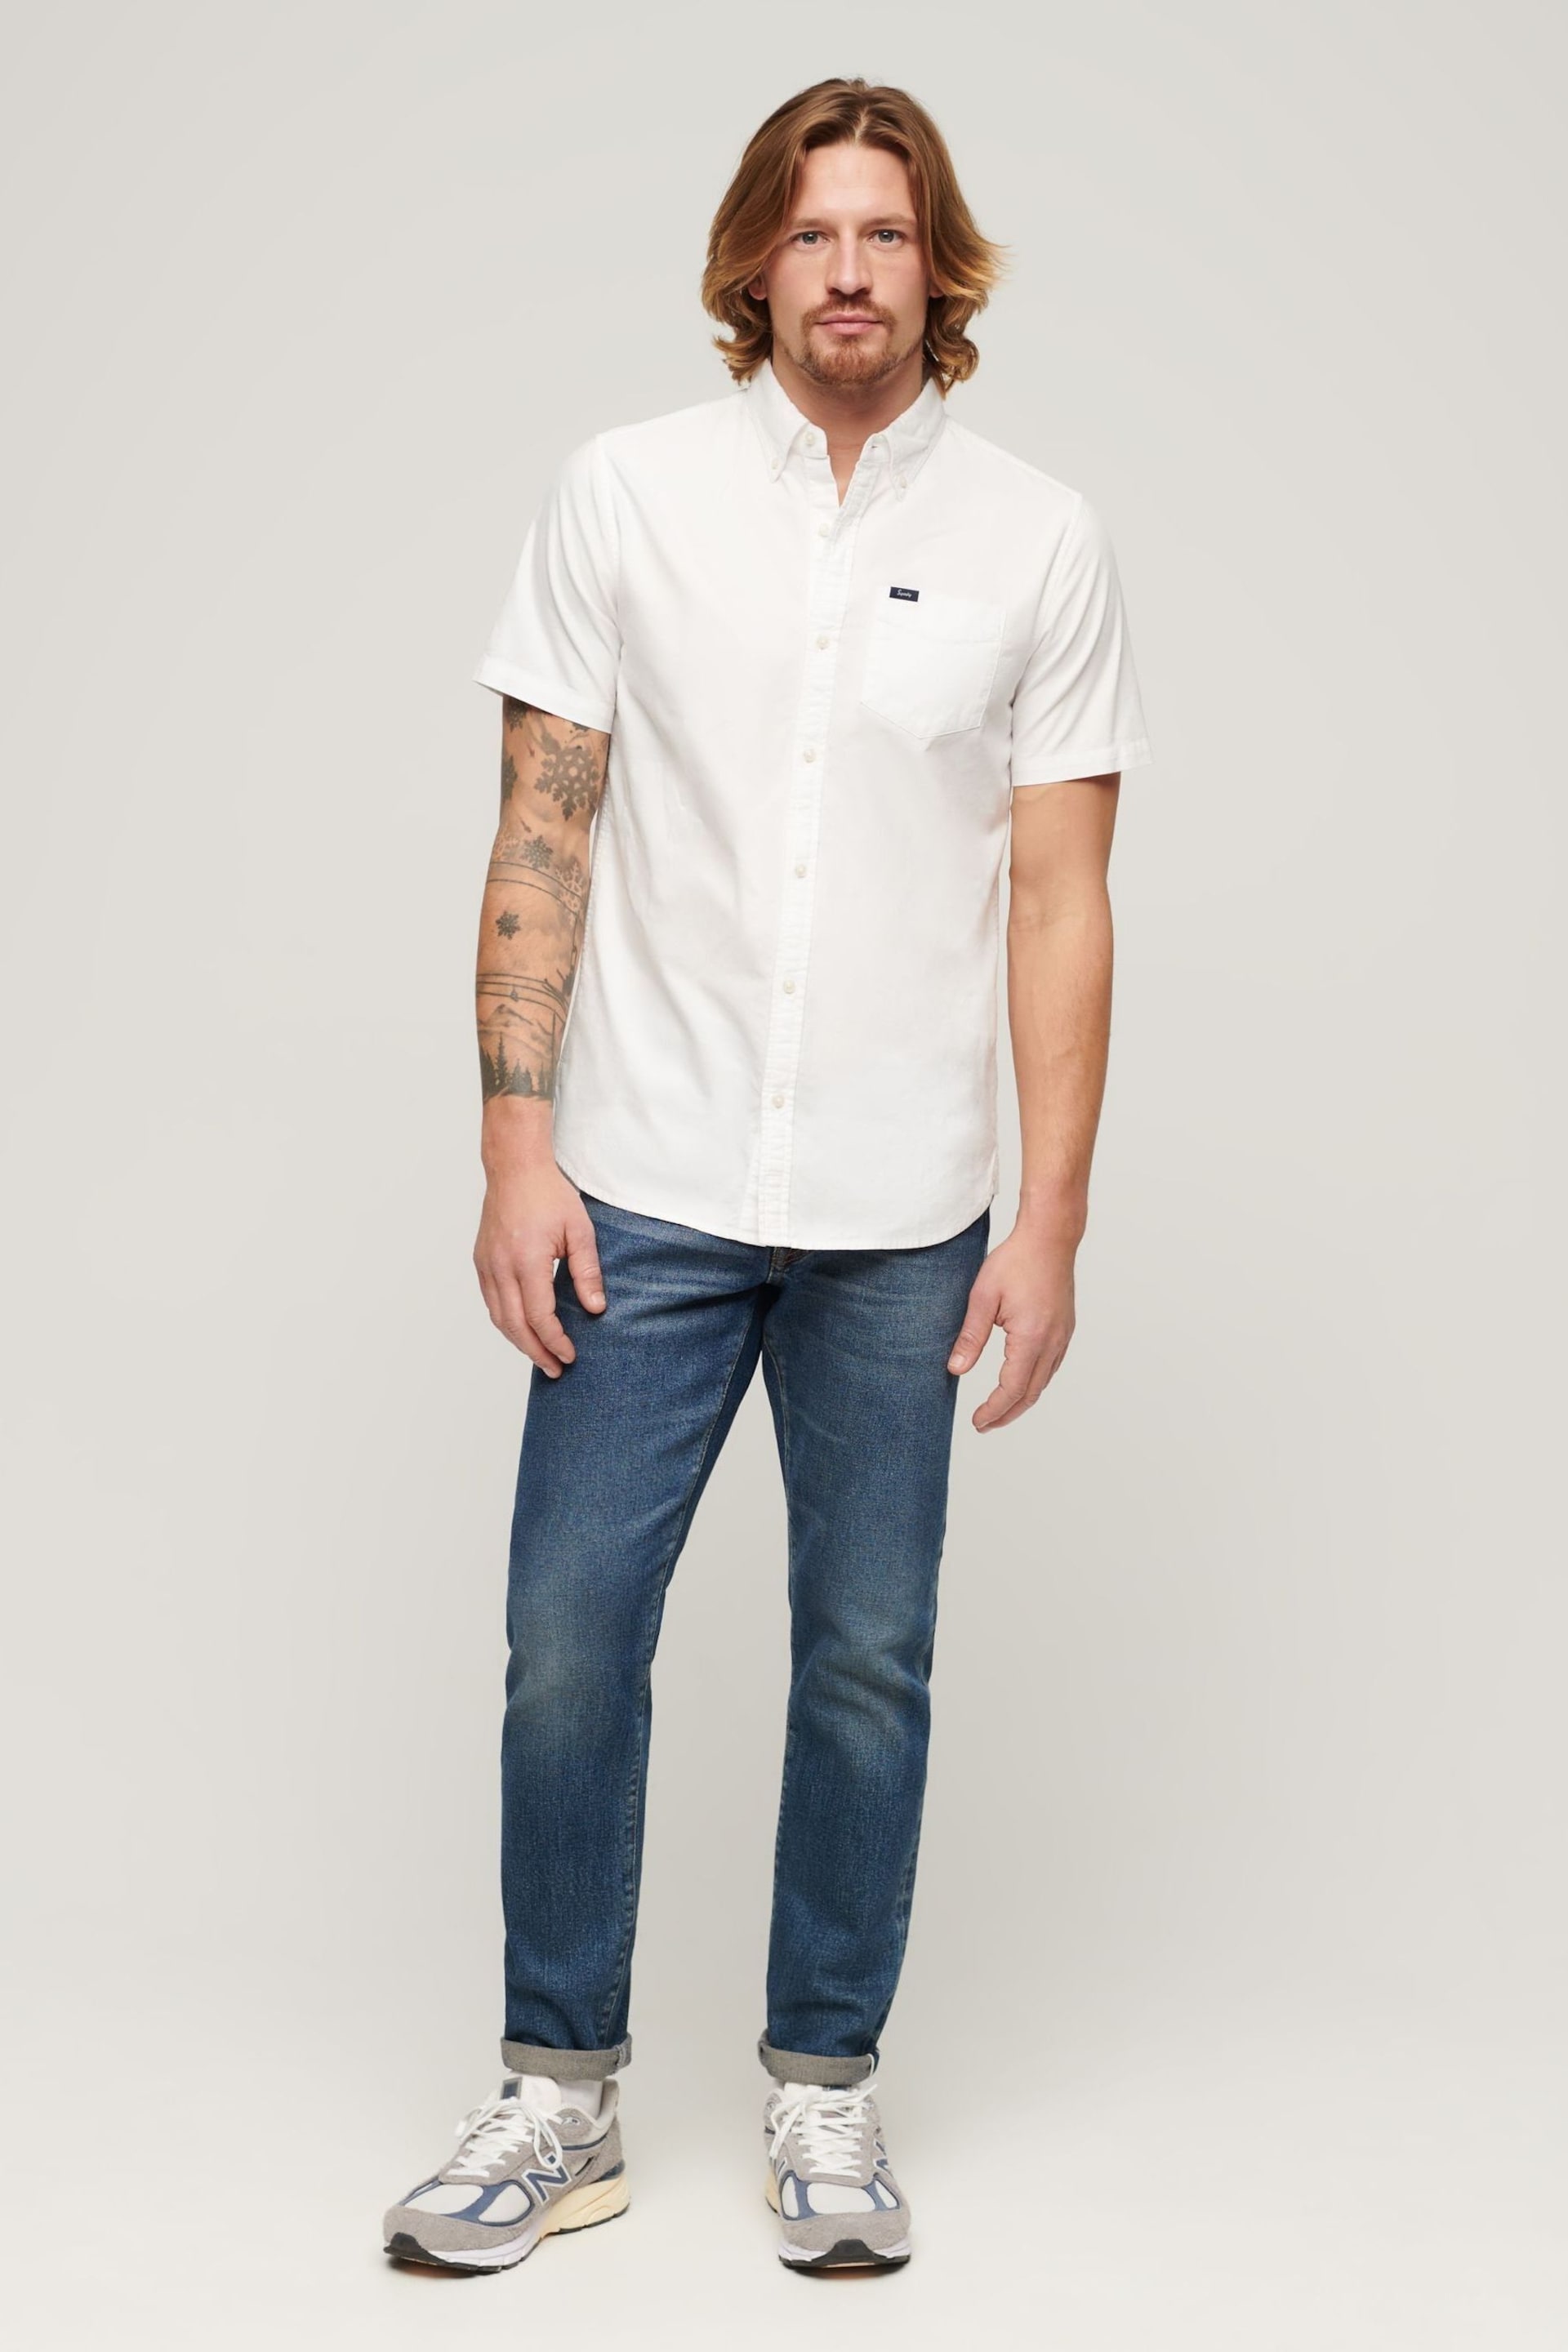 Superdry White Vintage Oxford Short Sleeve Shirt - Image 3 of 6